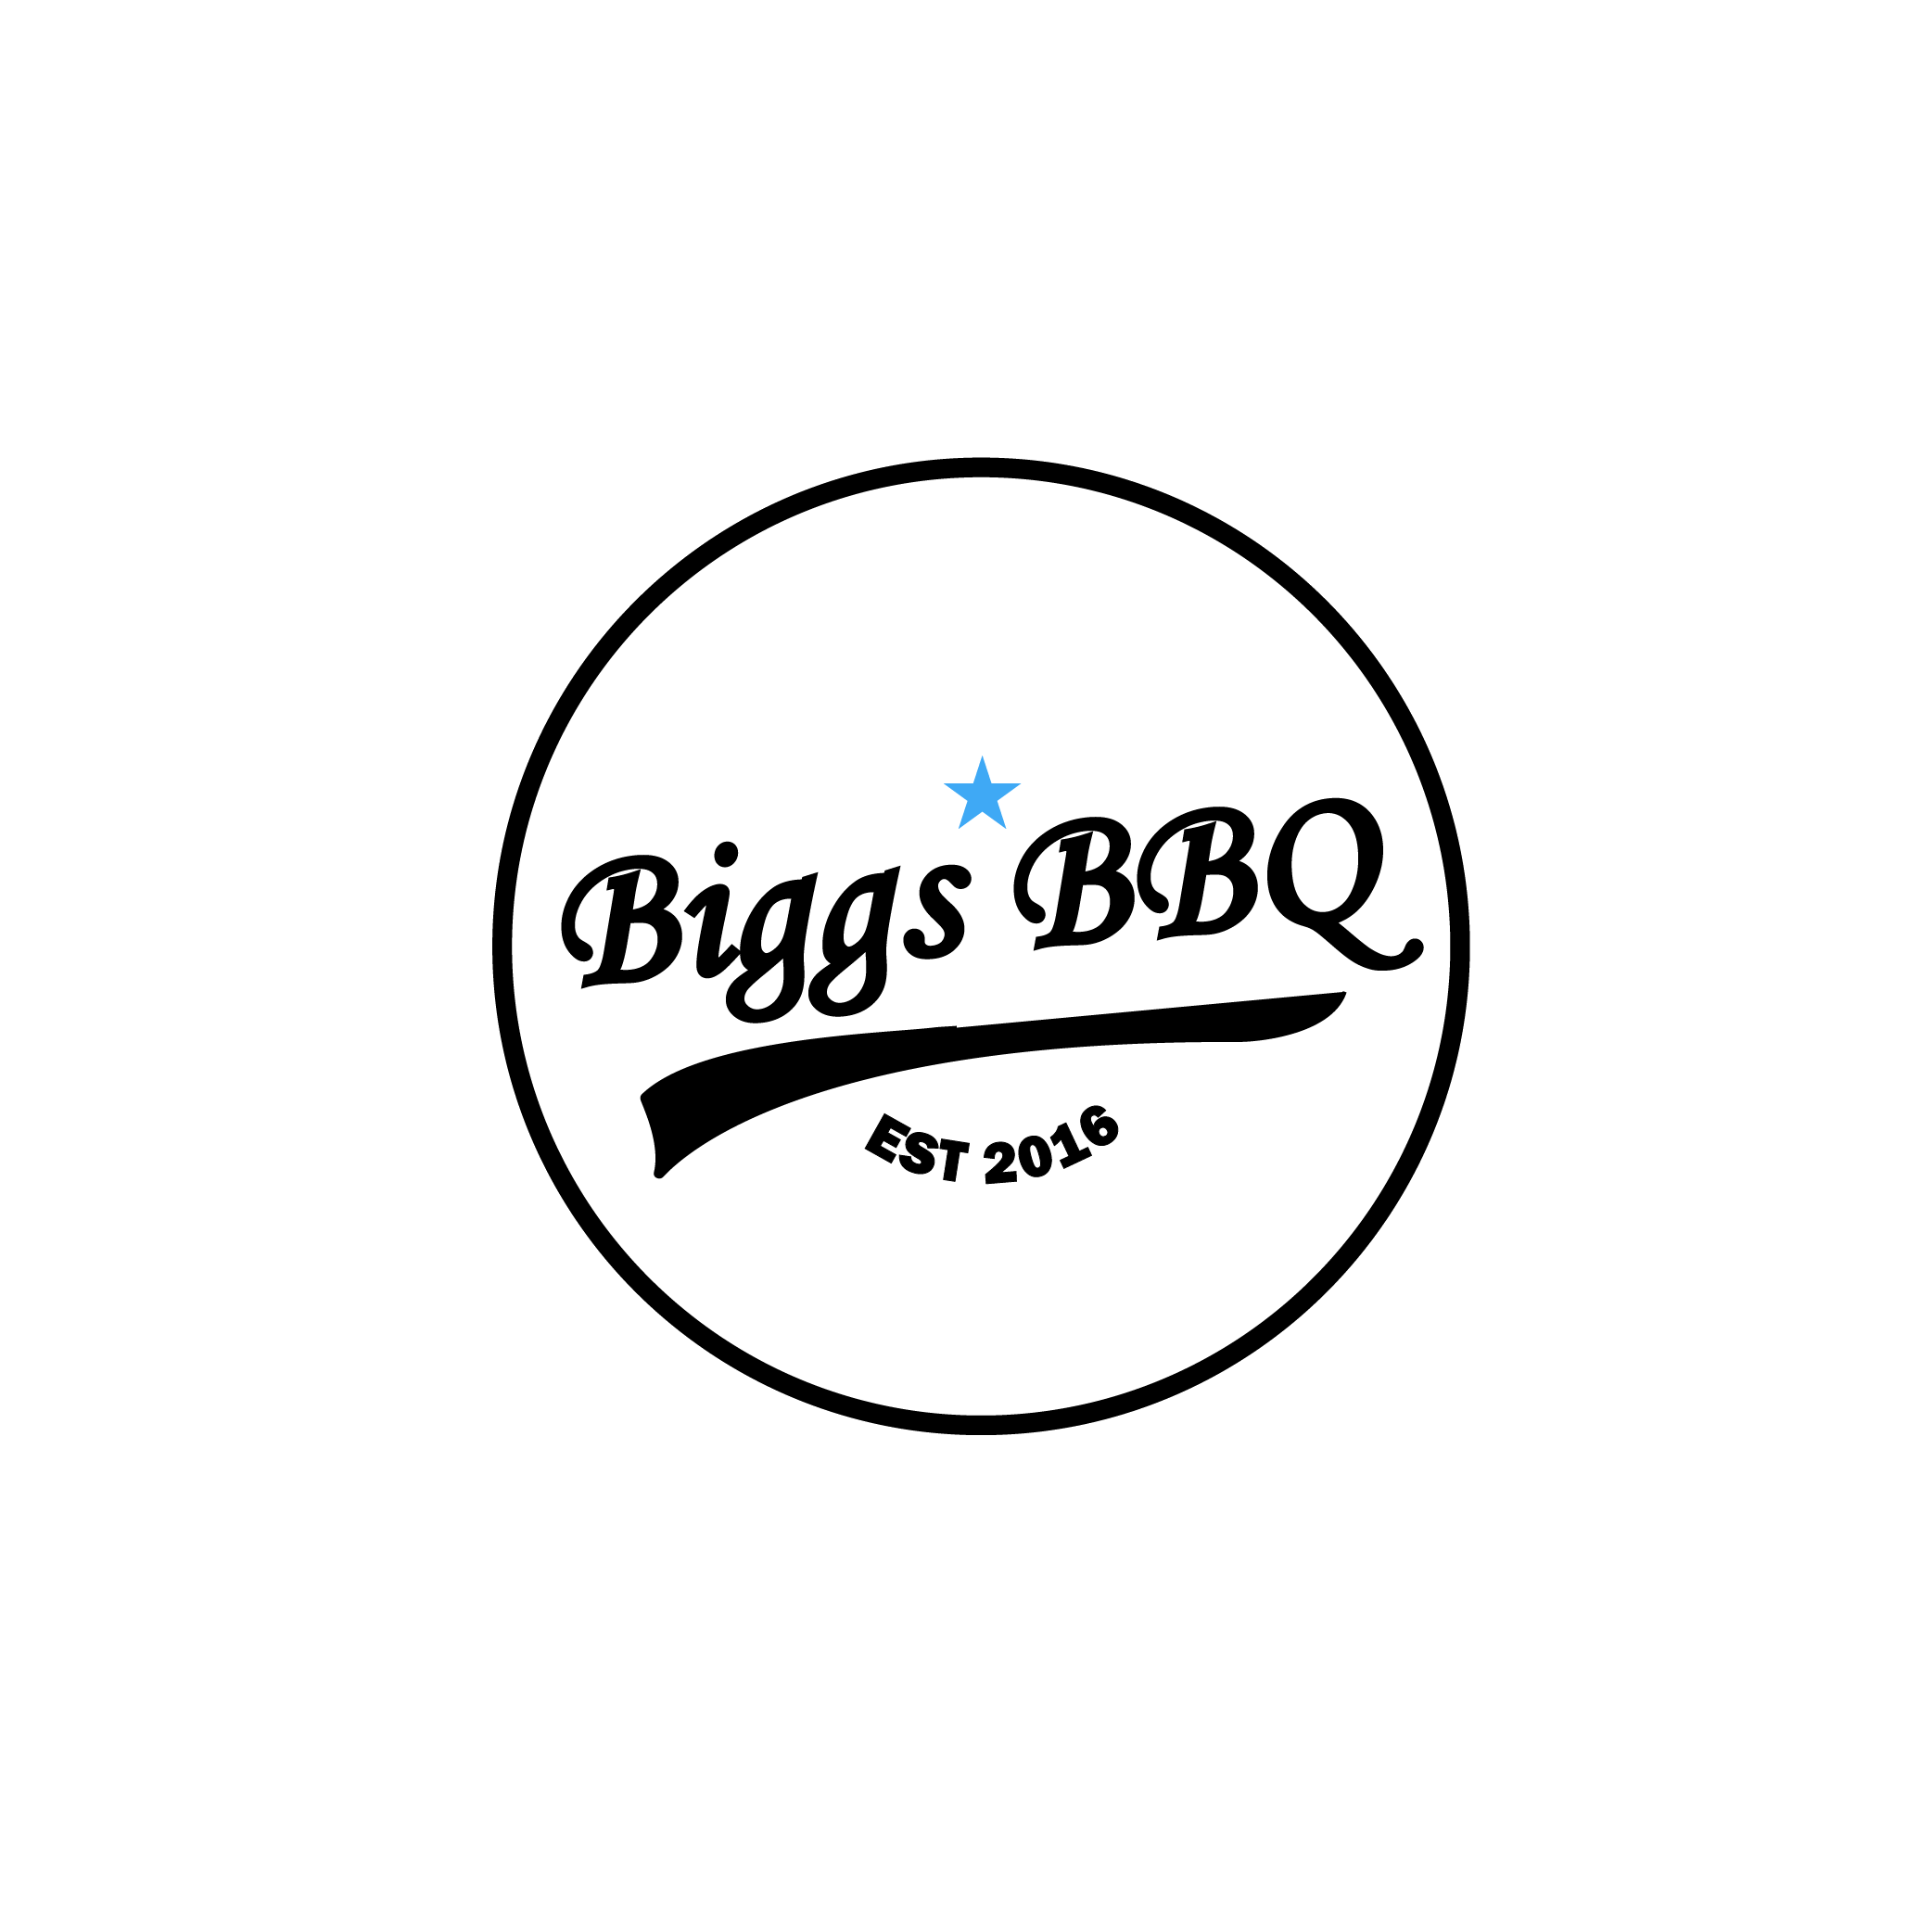 Biggs BBQ, LLC
480.269.6004
Charlie@BiggsBBQ.net